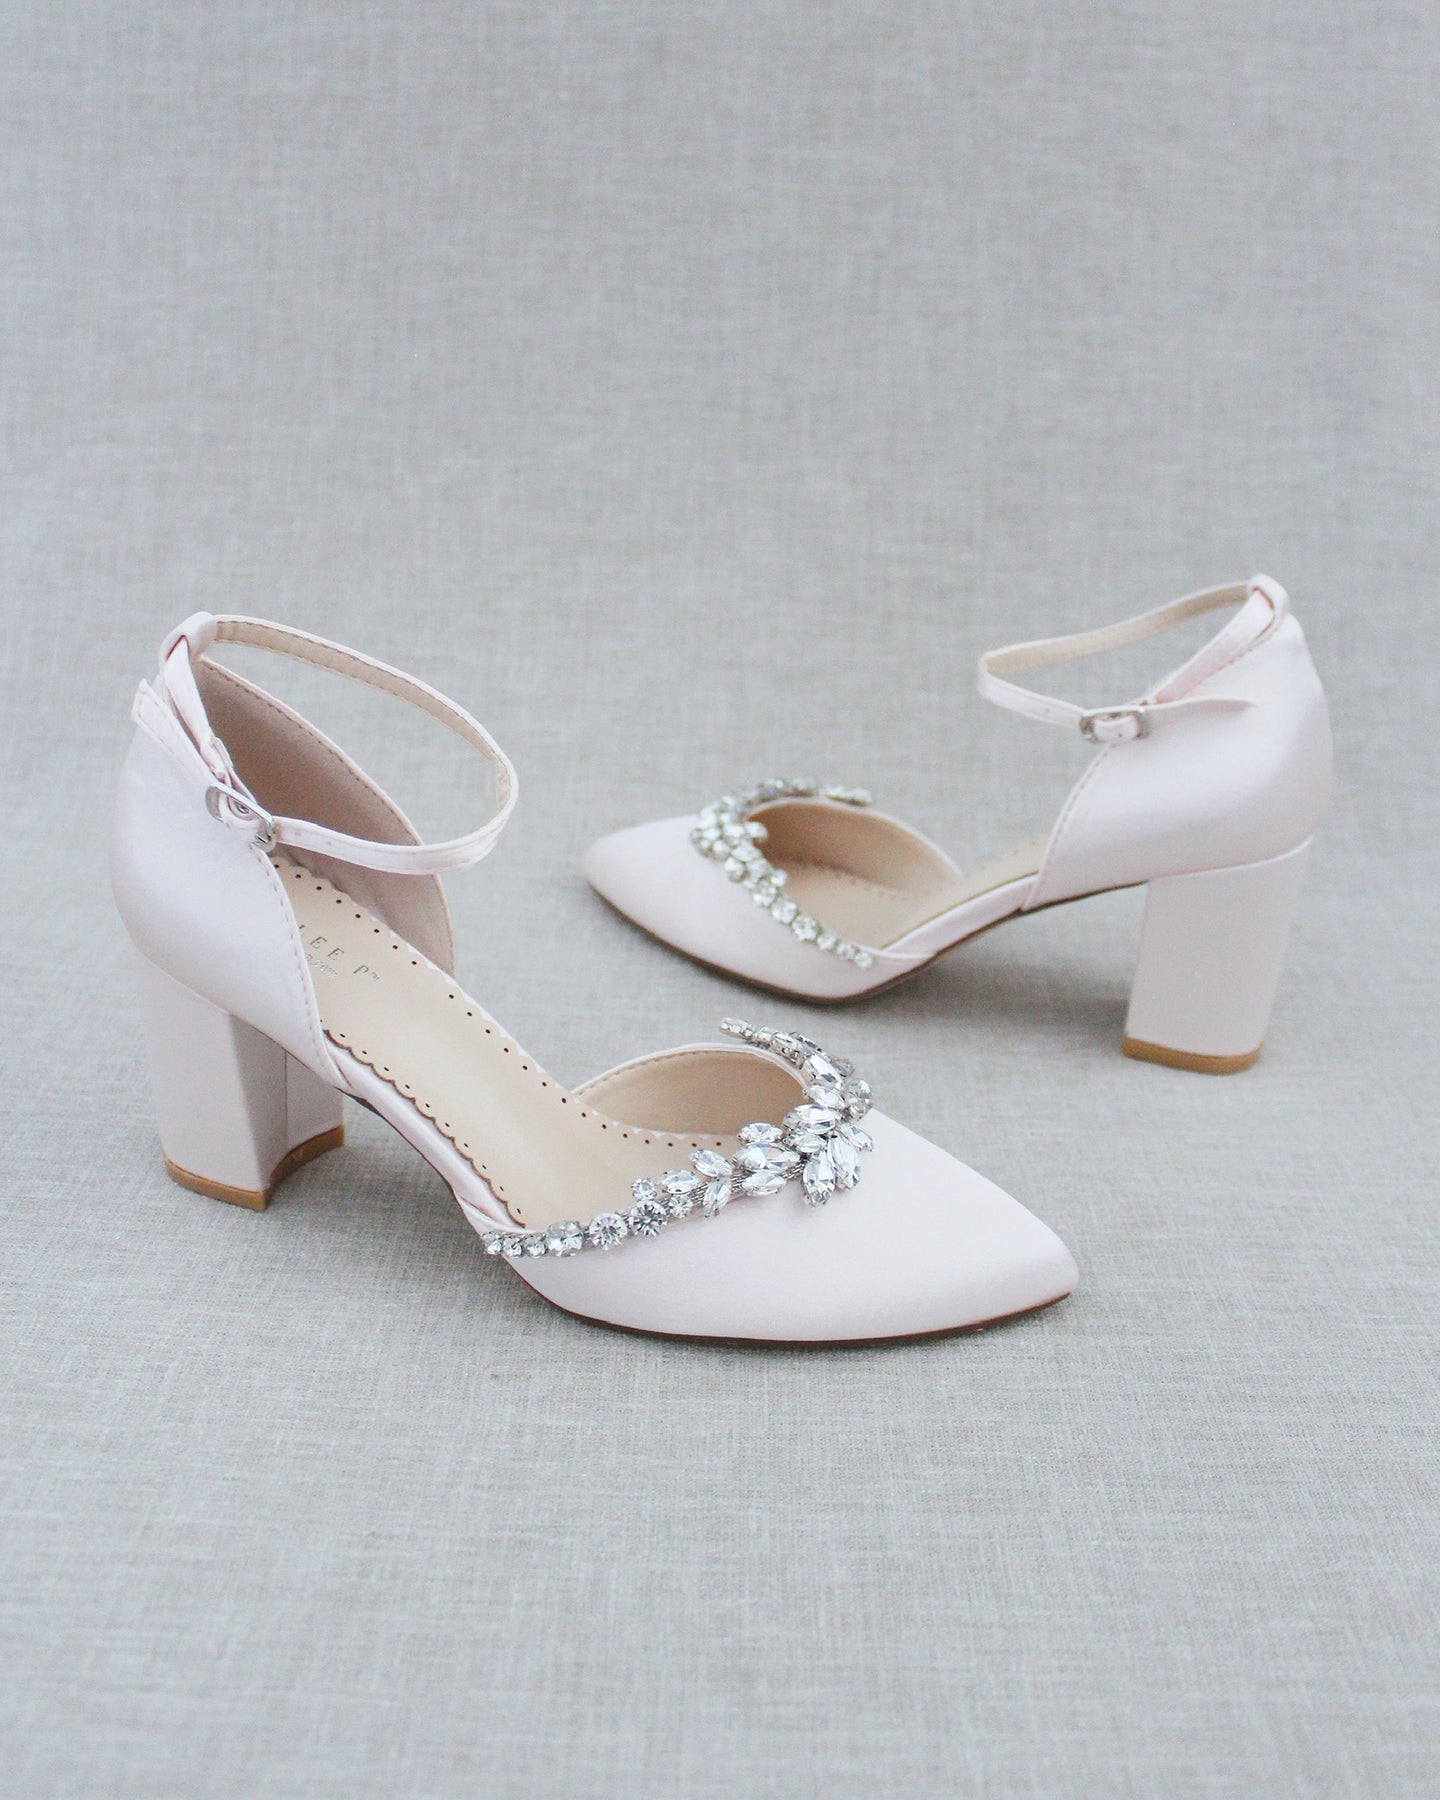 Marquise Rhinestone Block Heel Evening Shoes, Prom Shoes, Bridesmaids ...